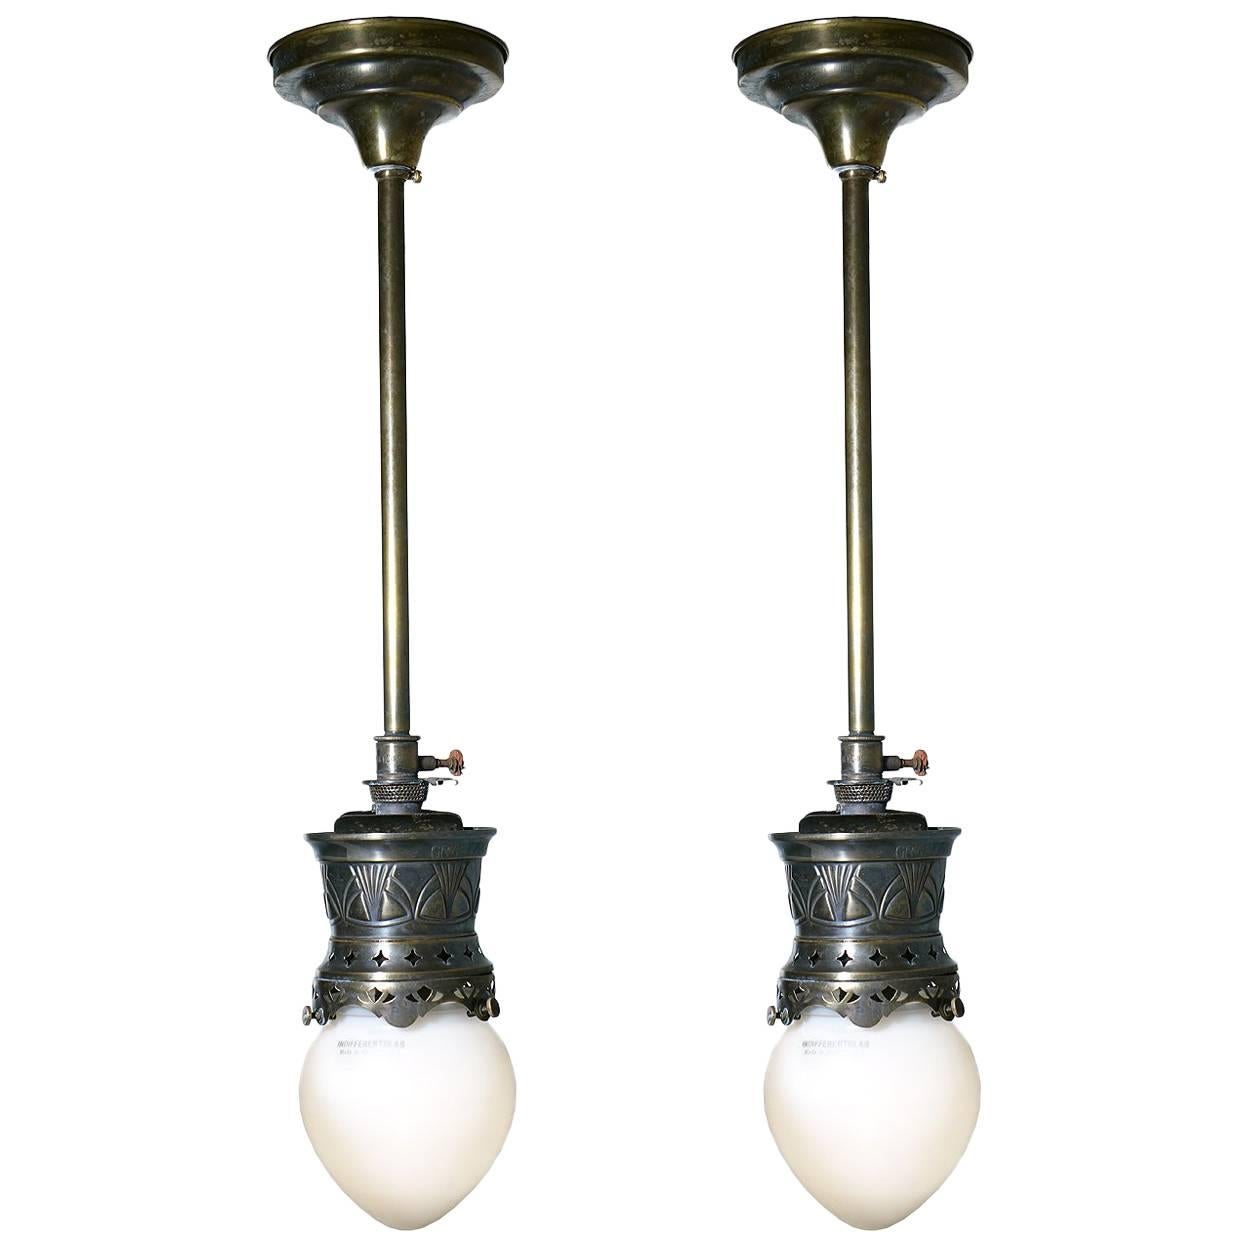 Pair of Original Arts & Crafts Mini Gas Lamps